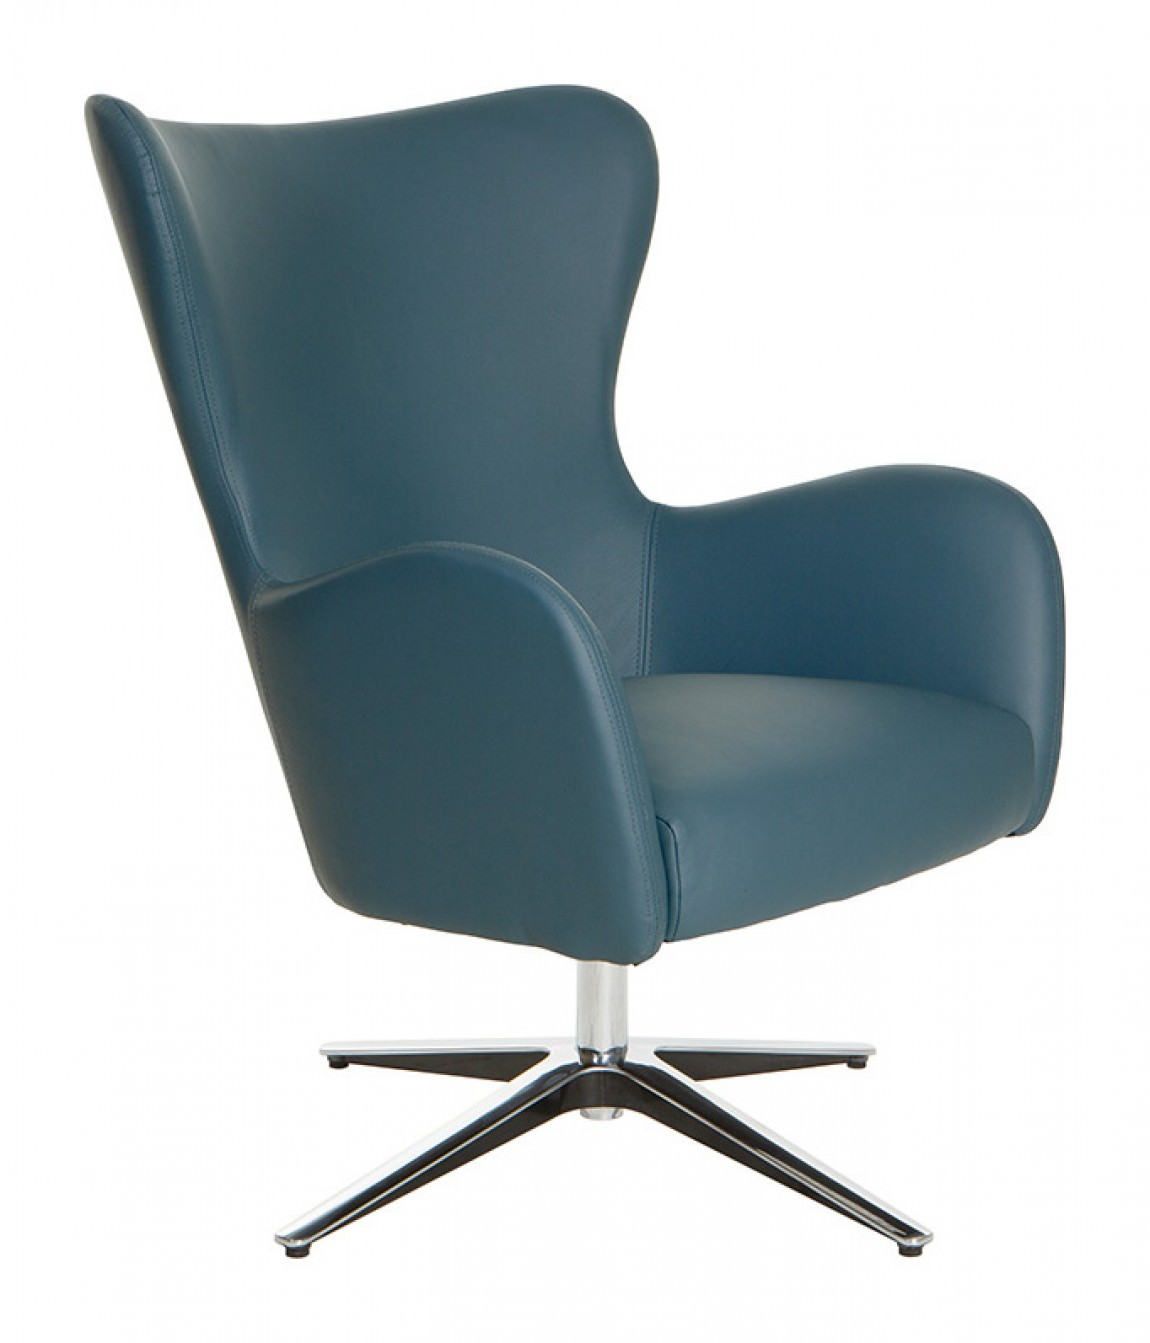 https://madisonliquidators.com/images/p/1150/25105-fabric-swivel-chair-1.jpg